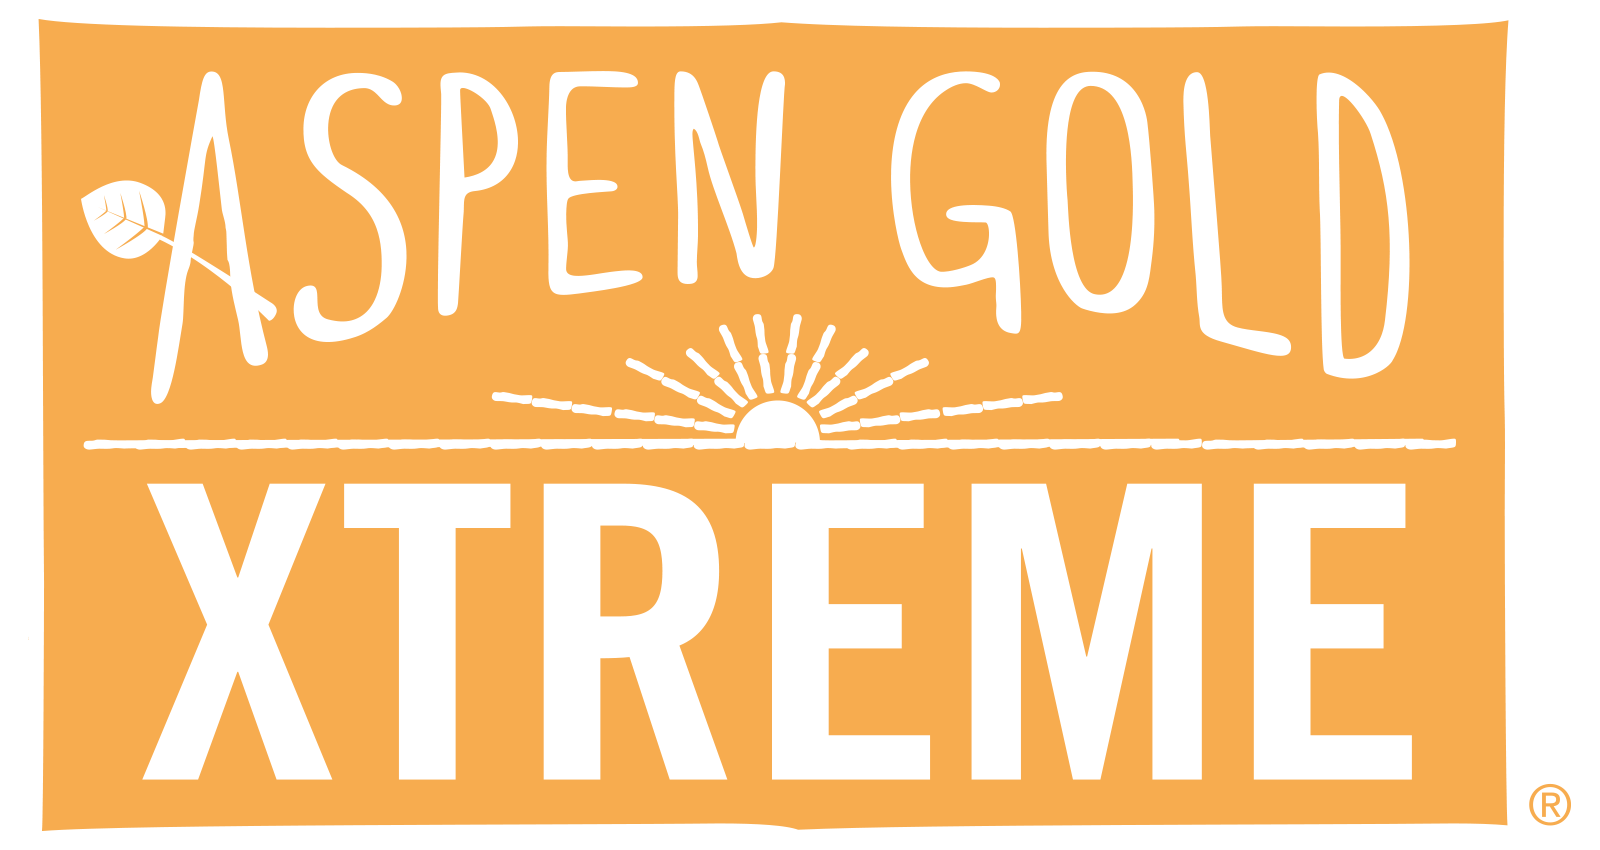 Aspen Gold Xtreme logo